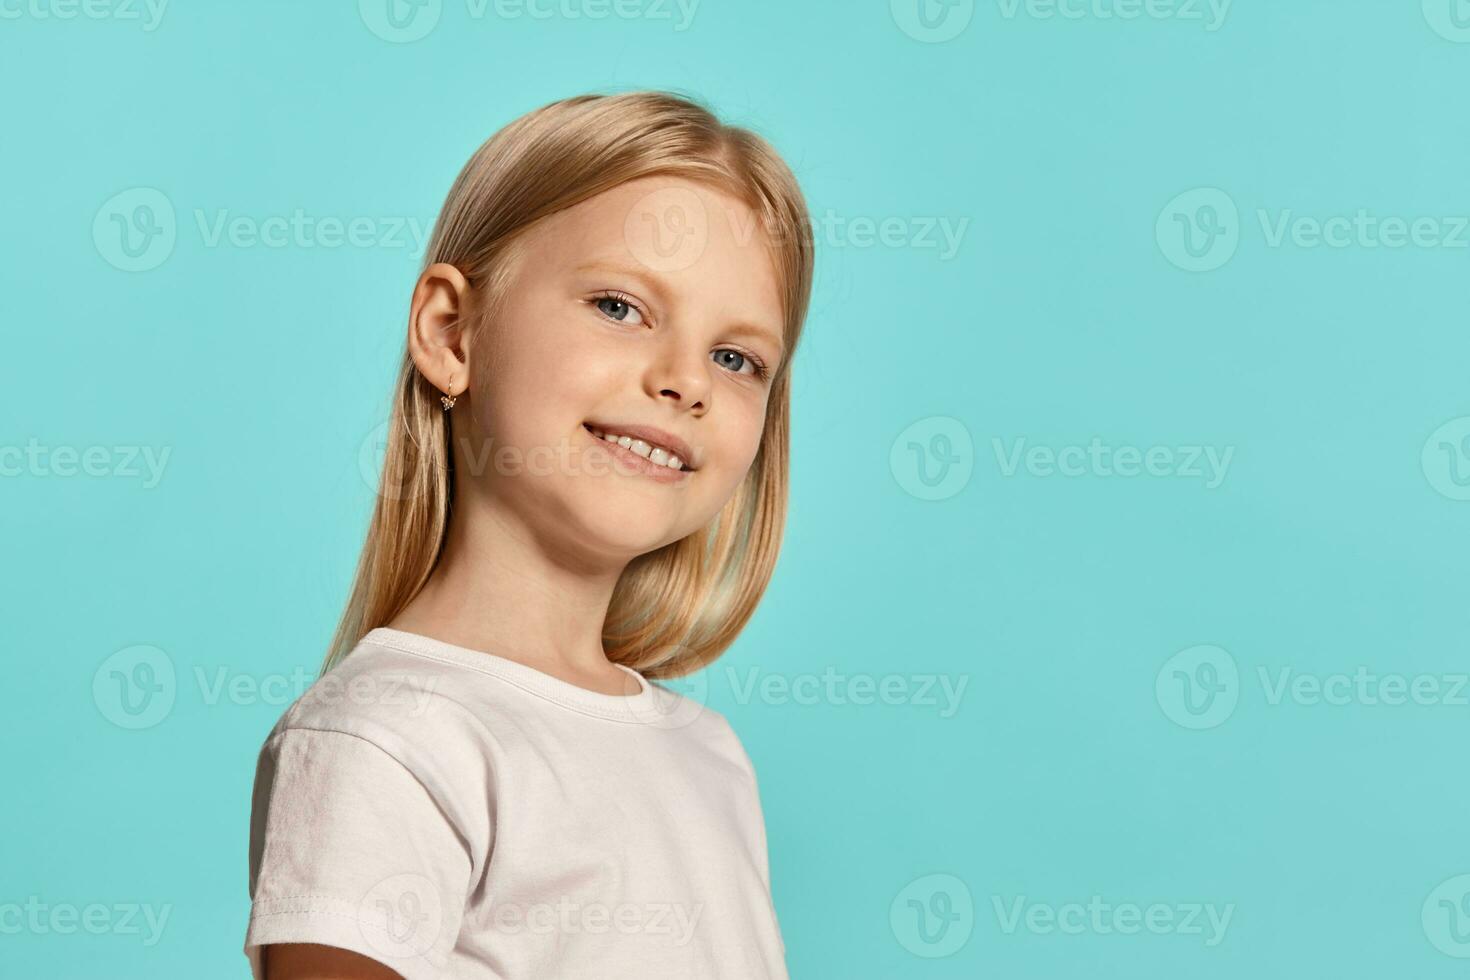 de cerca estudio Disparo de un encantador rubia pequeño niña en un blanco camiseta posando en contra un azul antecedentes. foto